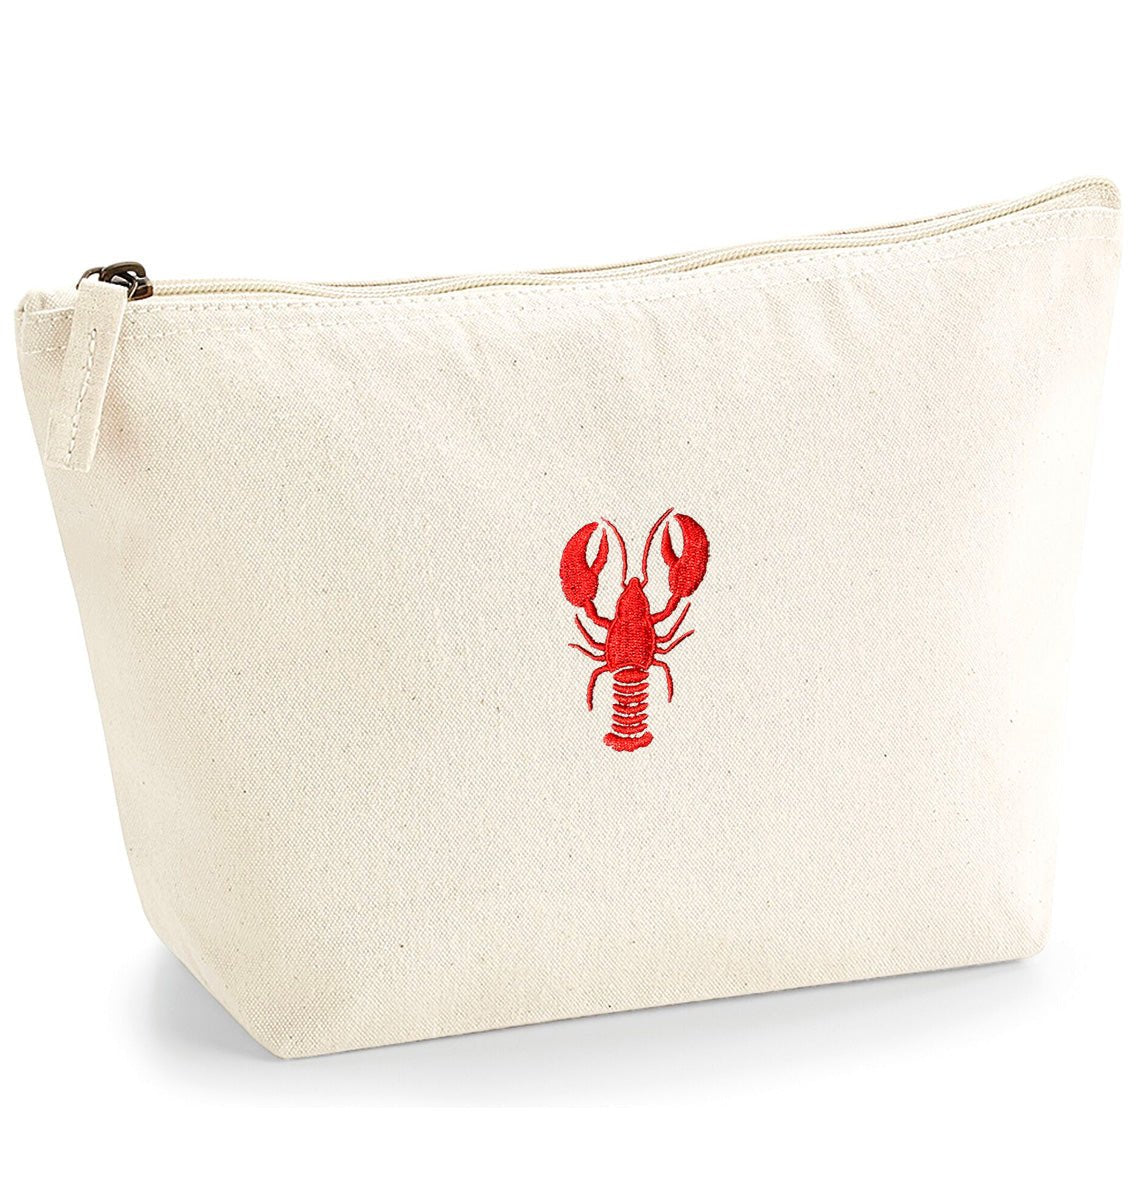 Lobster Organic Accessory Bag - Blue Panda